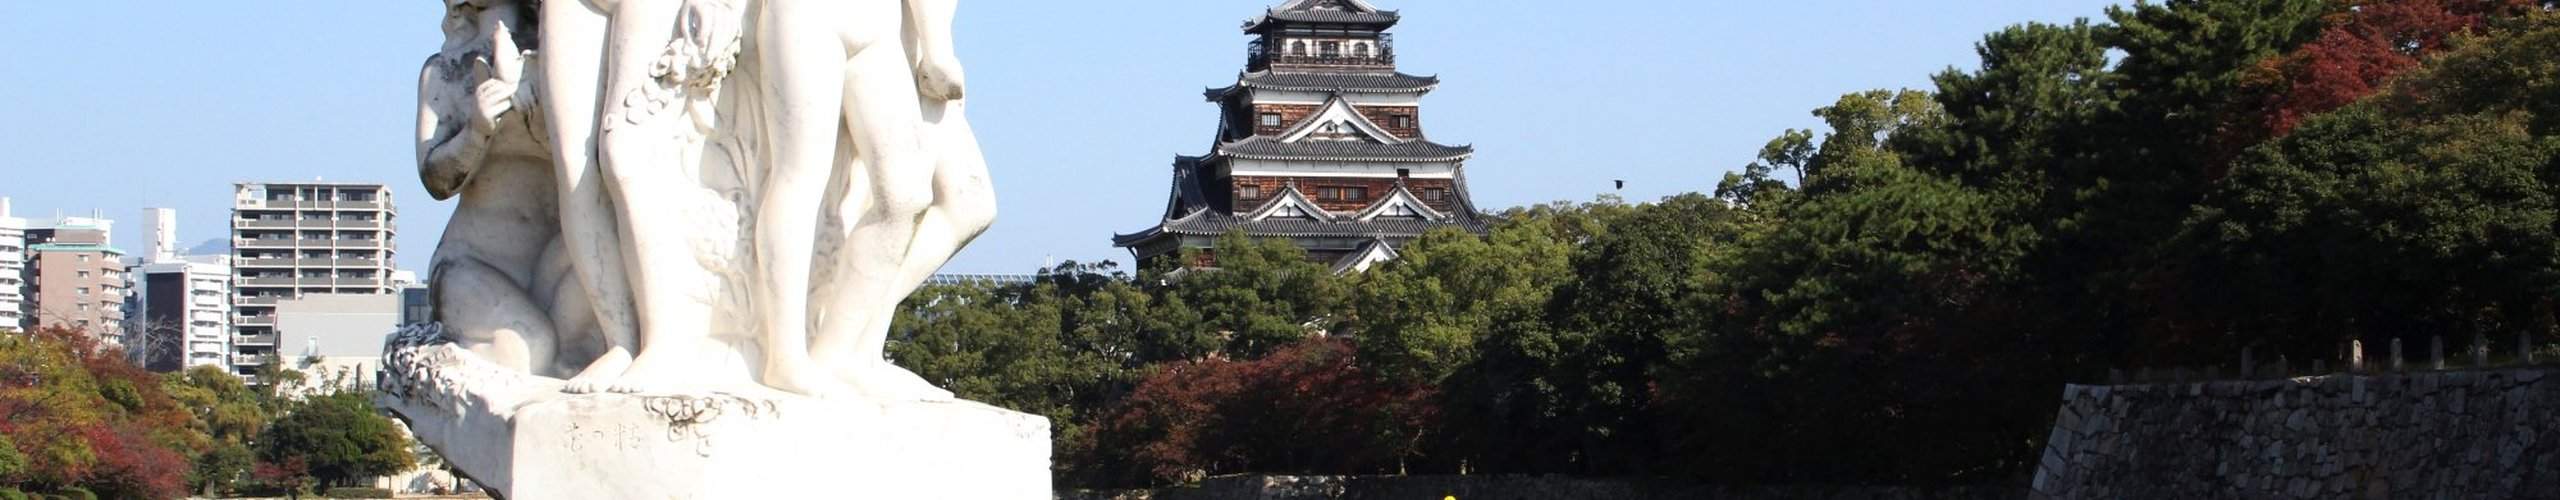 japanischer garten ideen das beste von hiroshima japan tourismus in hiroshima tripadvisor of japanischer garten ideen